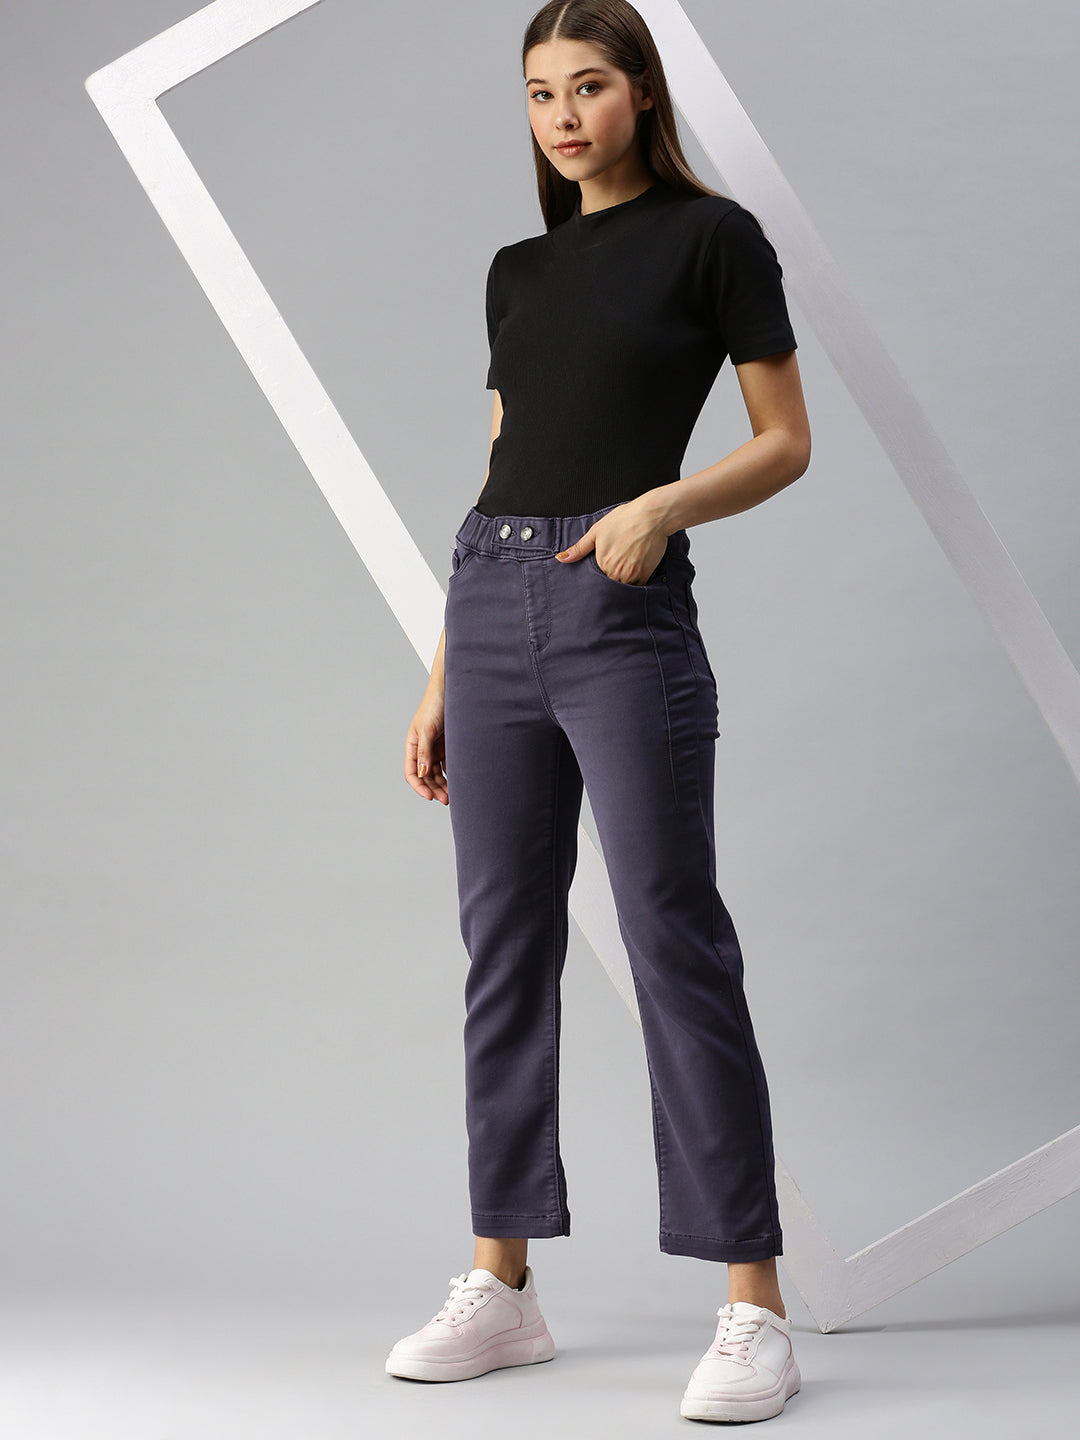 Women's Purple Solid Denim Relaxed Jeans